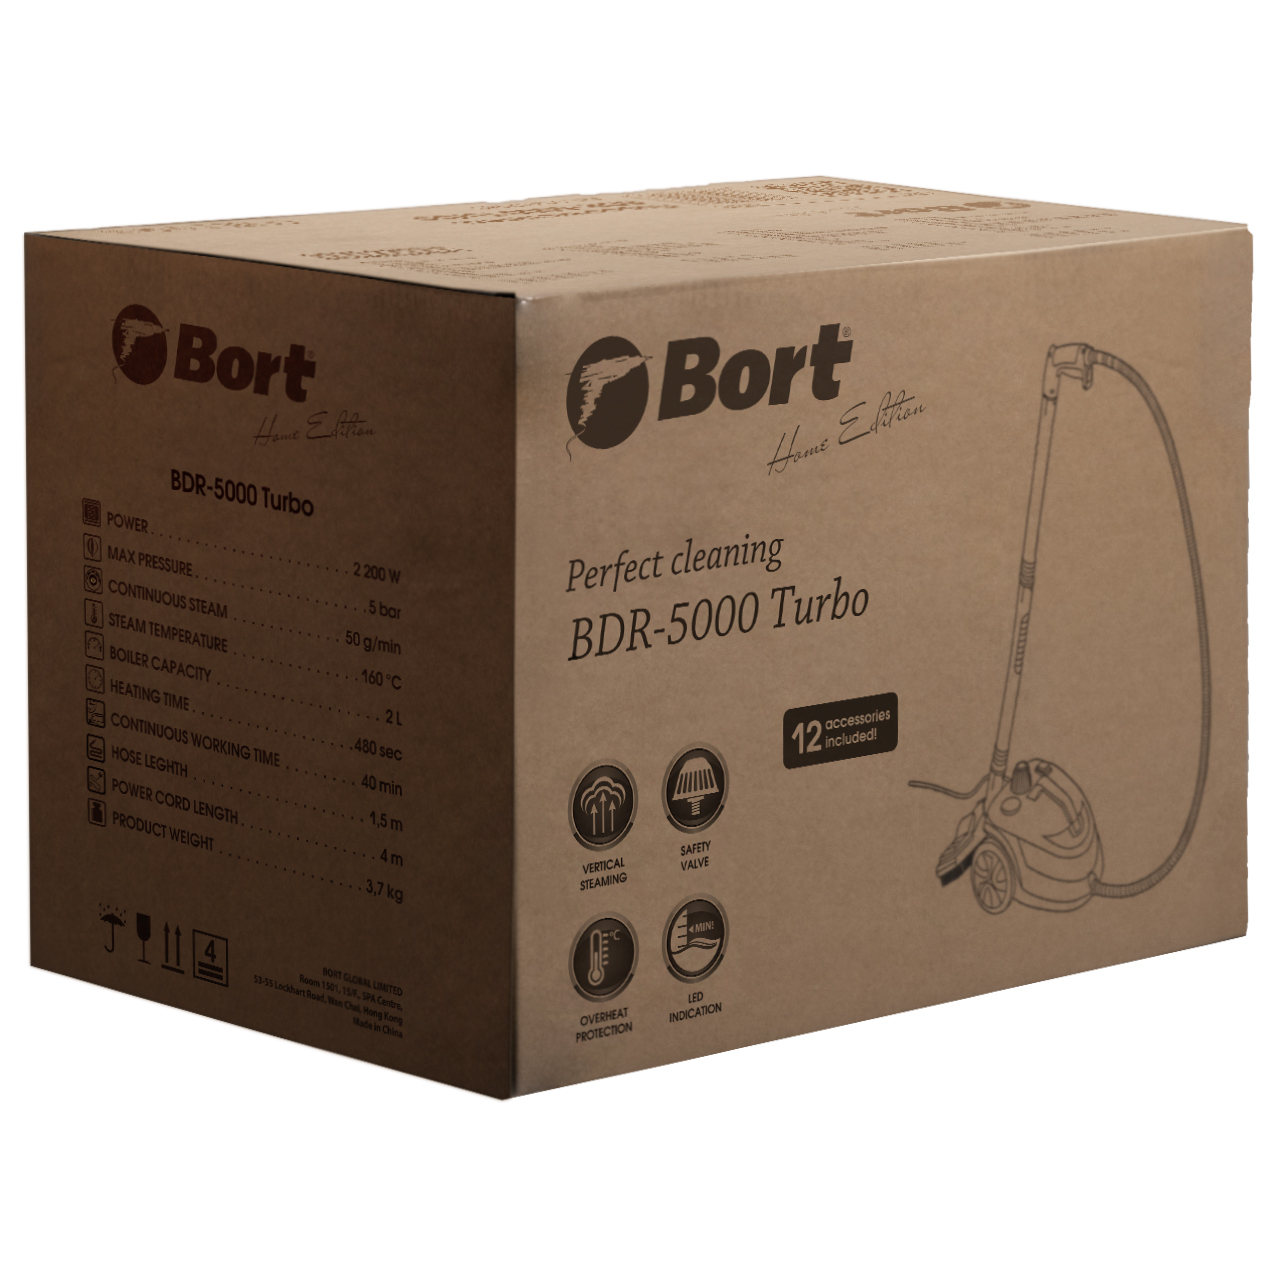 Steam cleaner BORT BDR-5000 Turbo